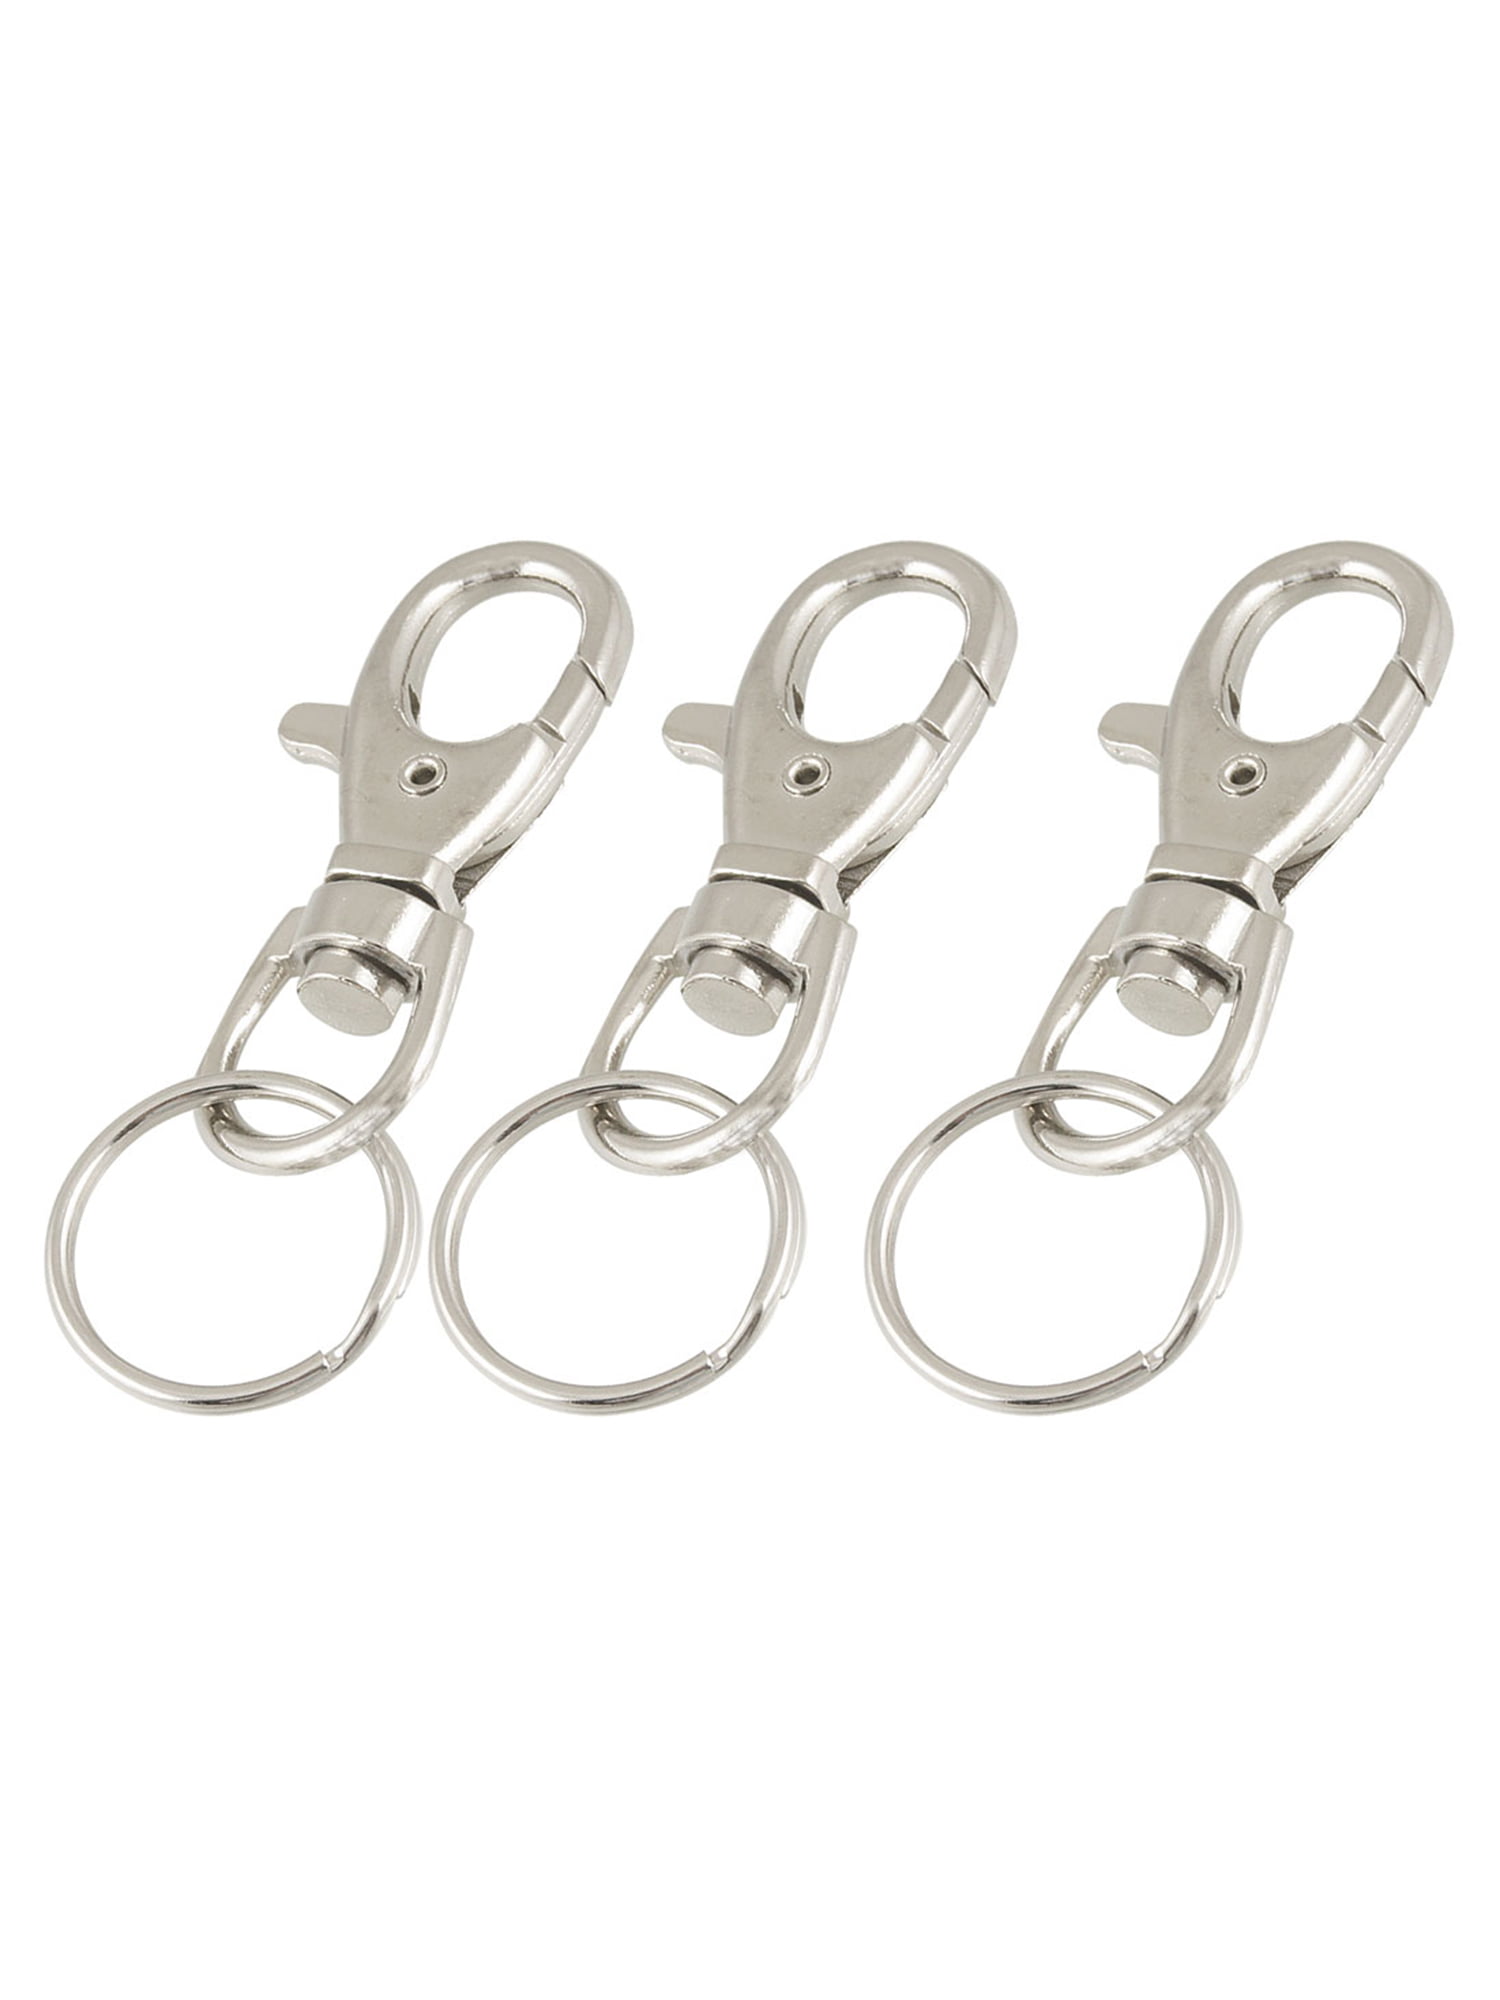 2pcs Useful Stainless Steel Keychain Split Key Ring Clasps Clips Hook Buckle 